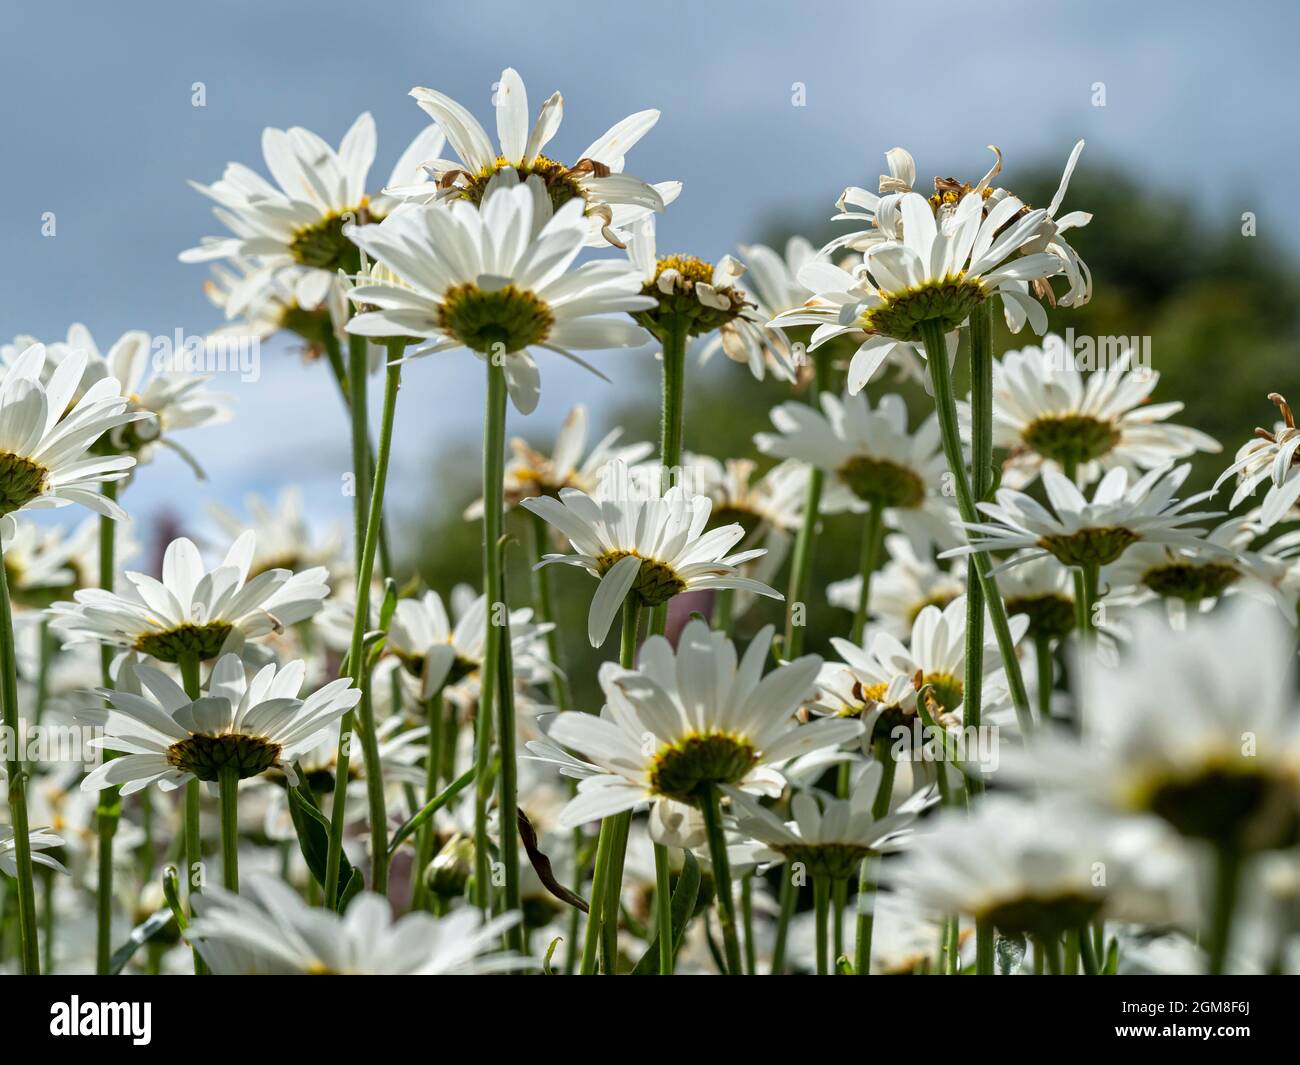 White oxeye daisies in a summer garden Stock Photo